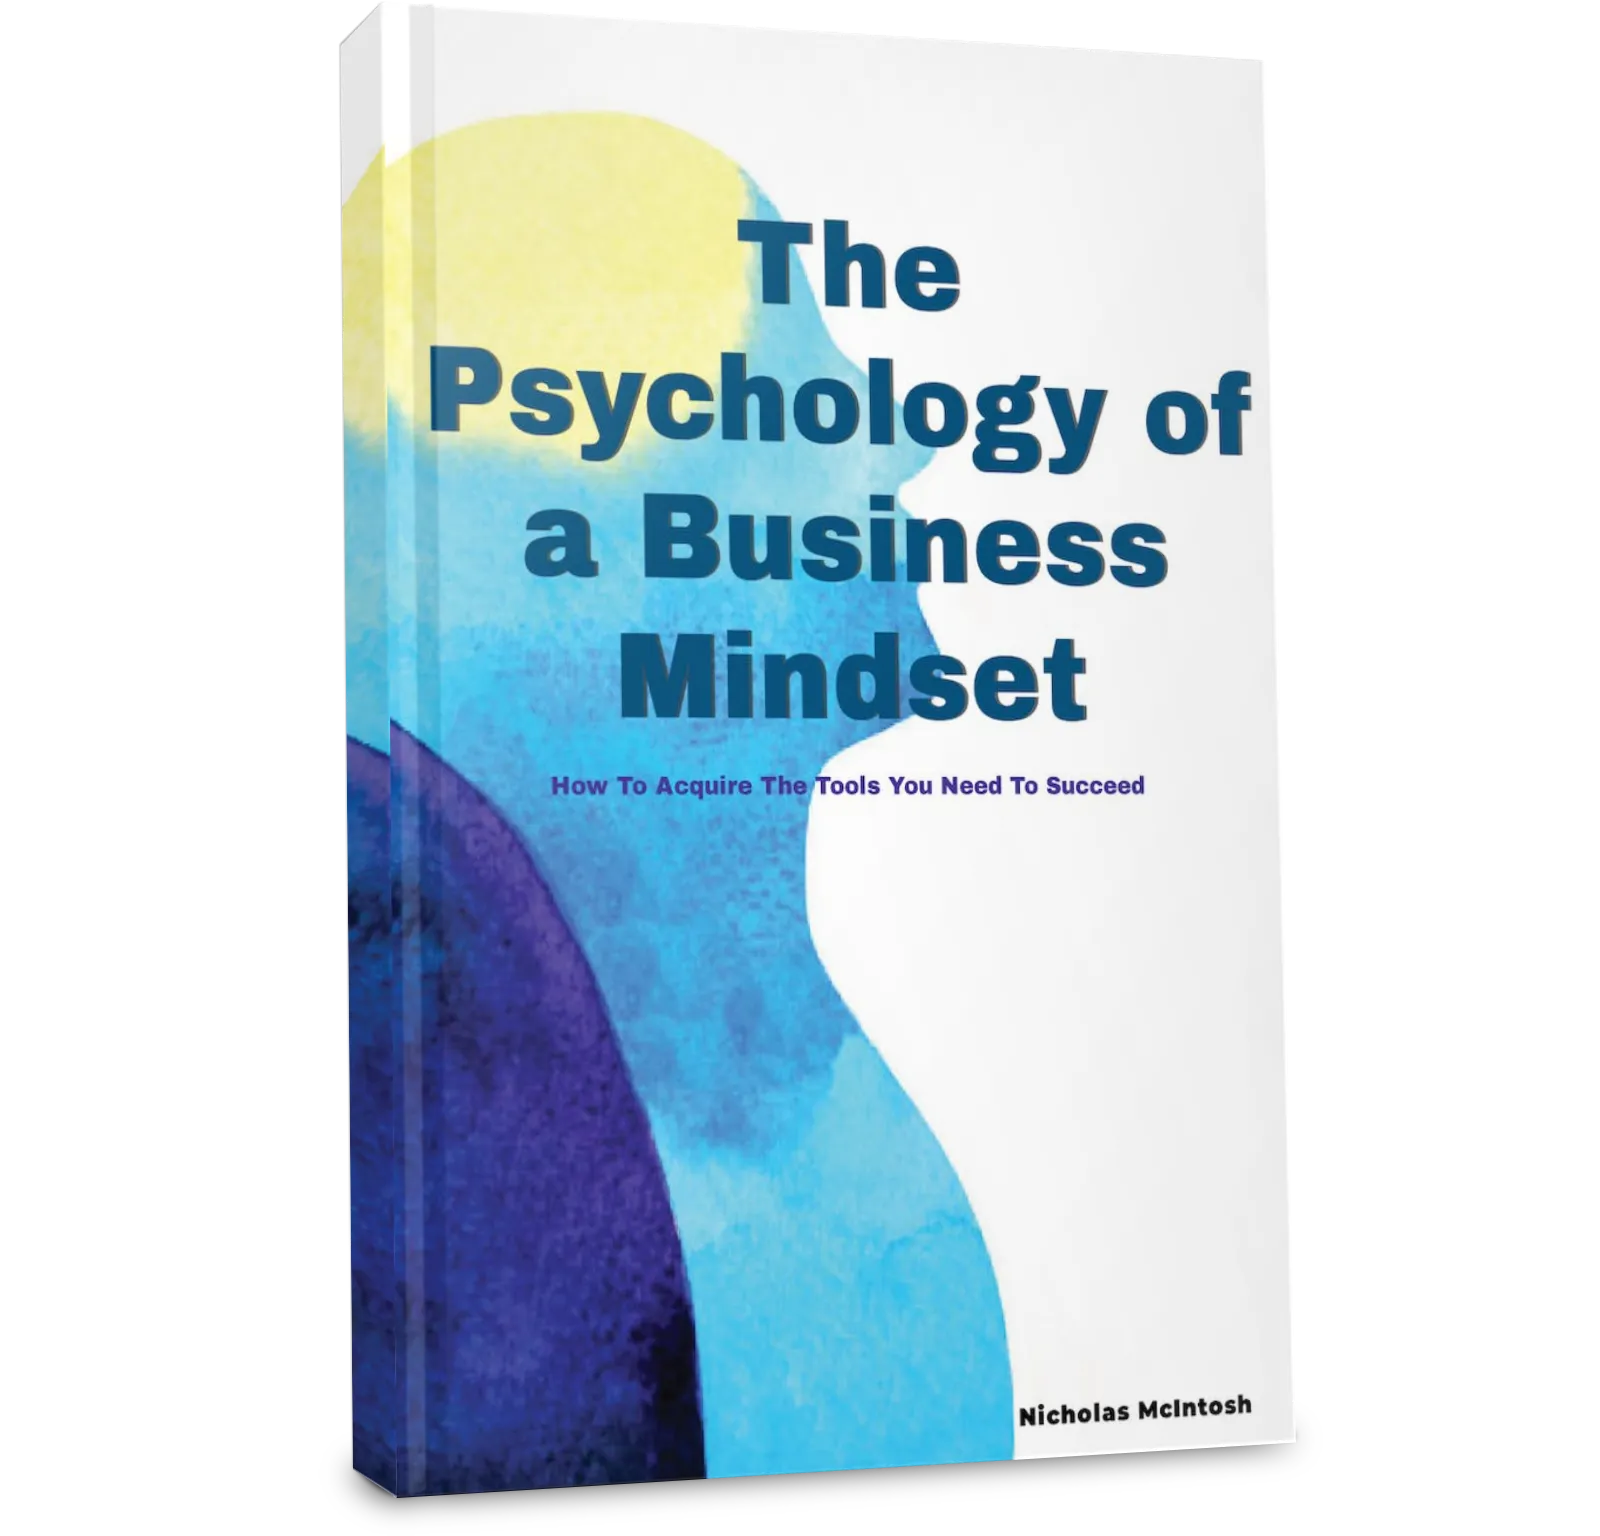 The Psychology of a Business Mindset